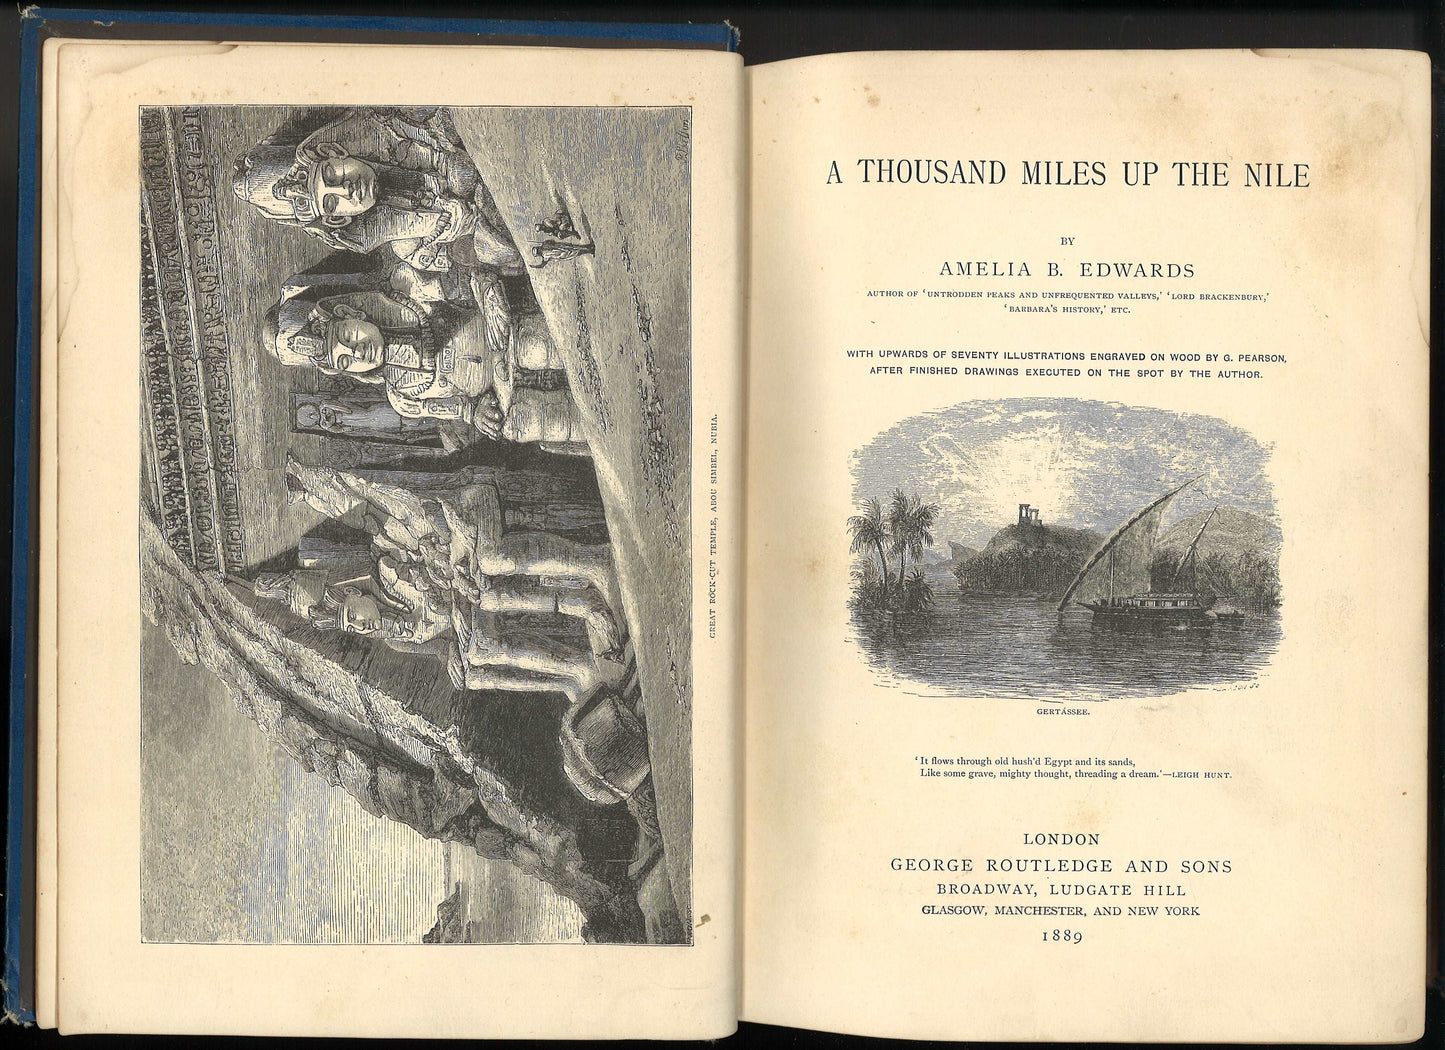 A Thousand Miles Up The Nile by Amelia B. Edwards